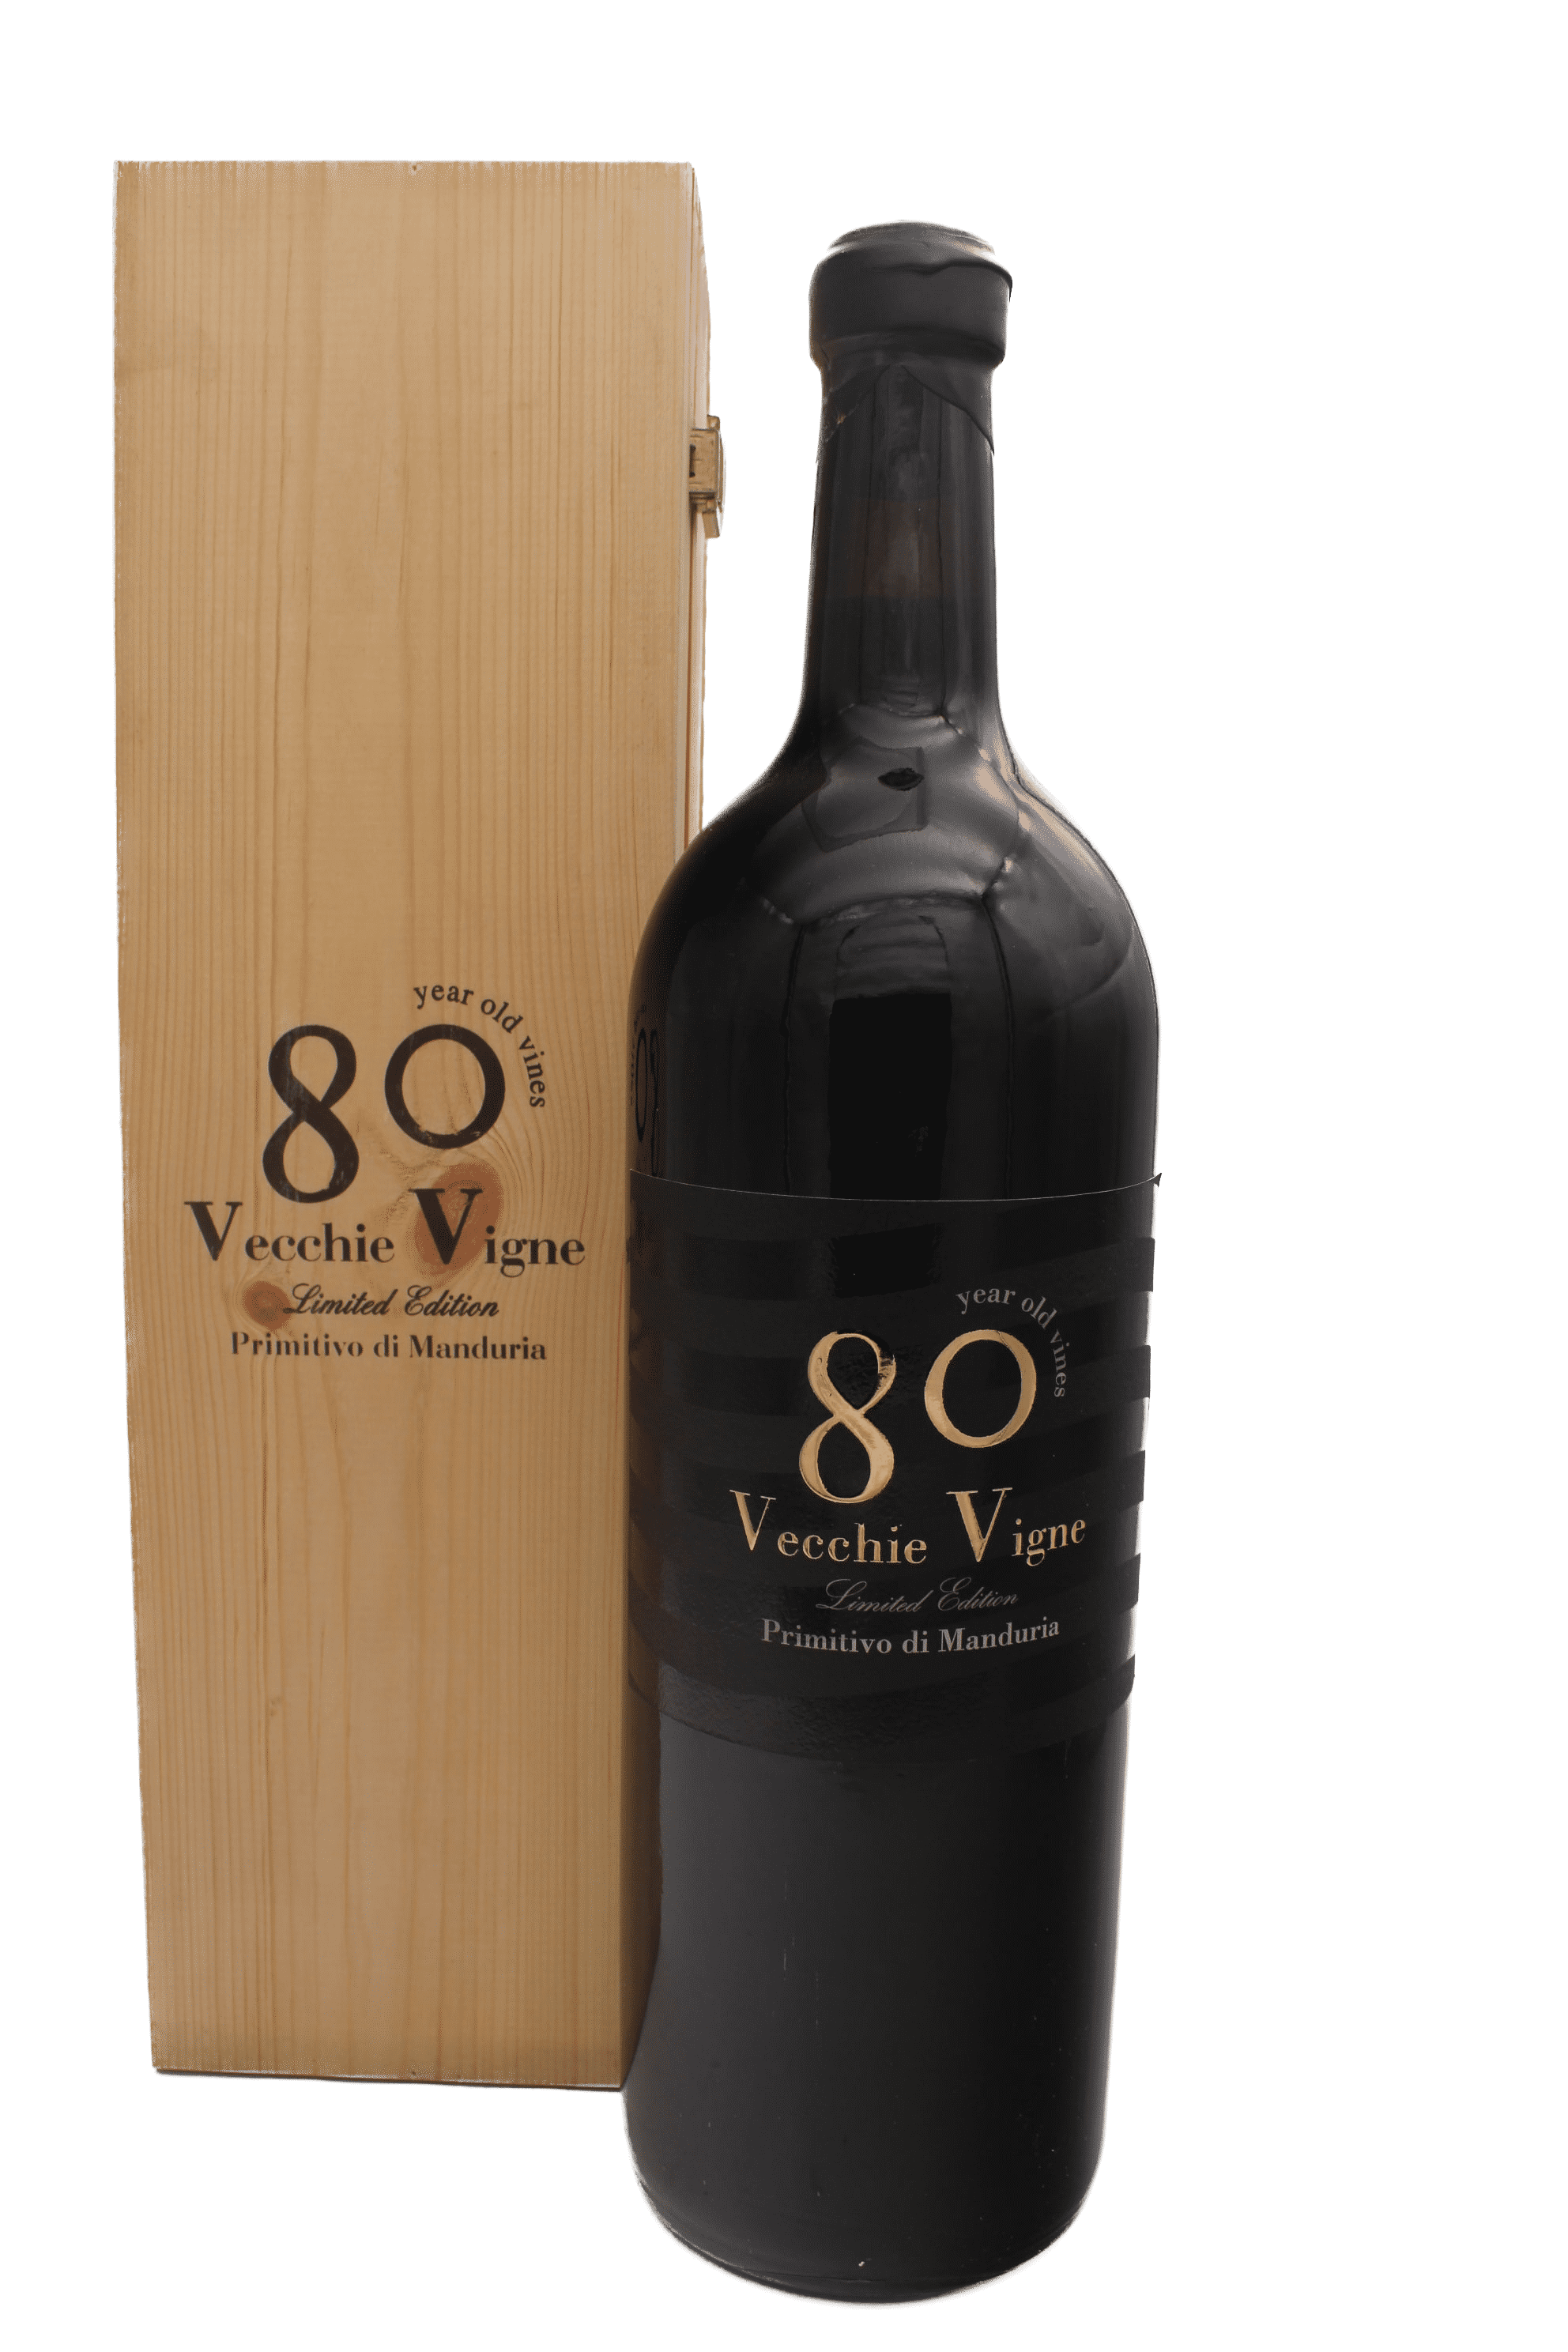 Cignomoro - 80 Vecchie Vigne Jeroboam